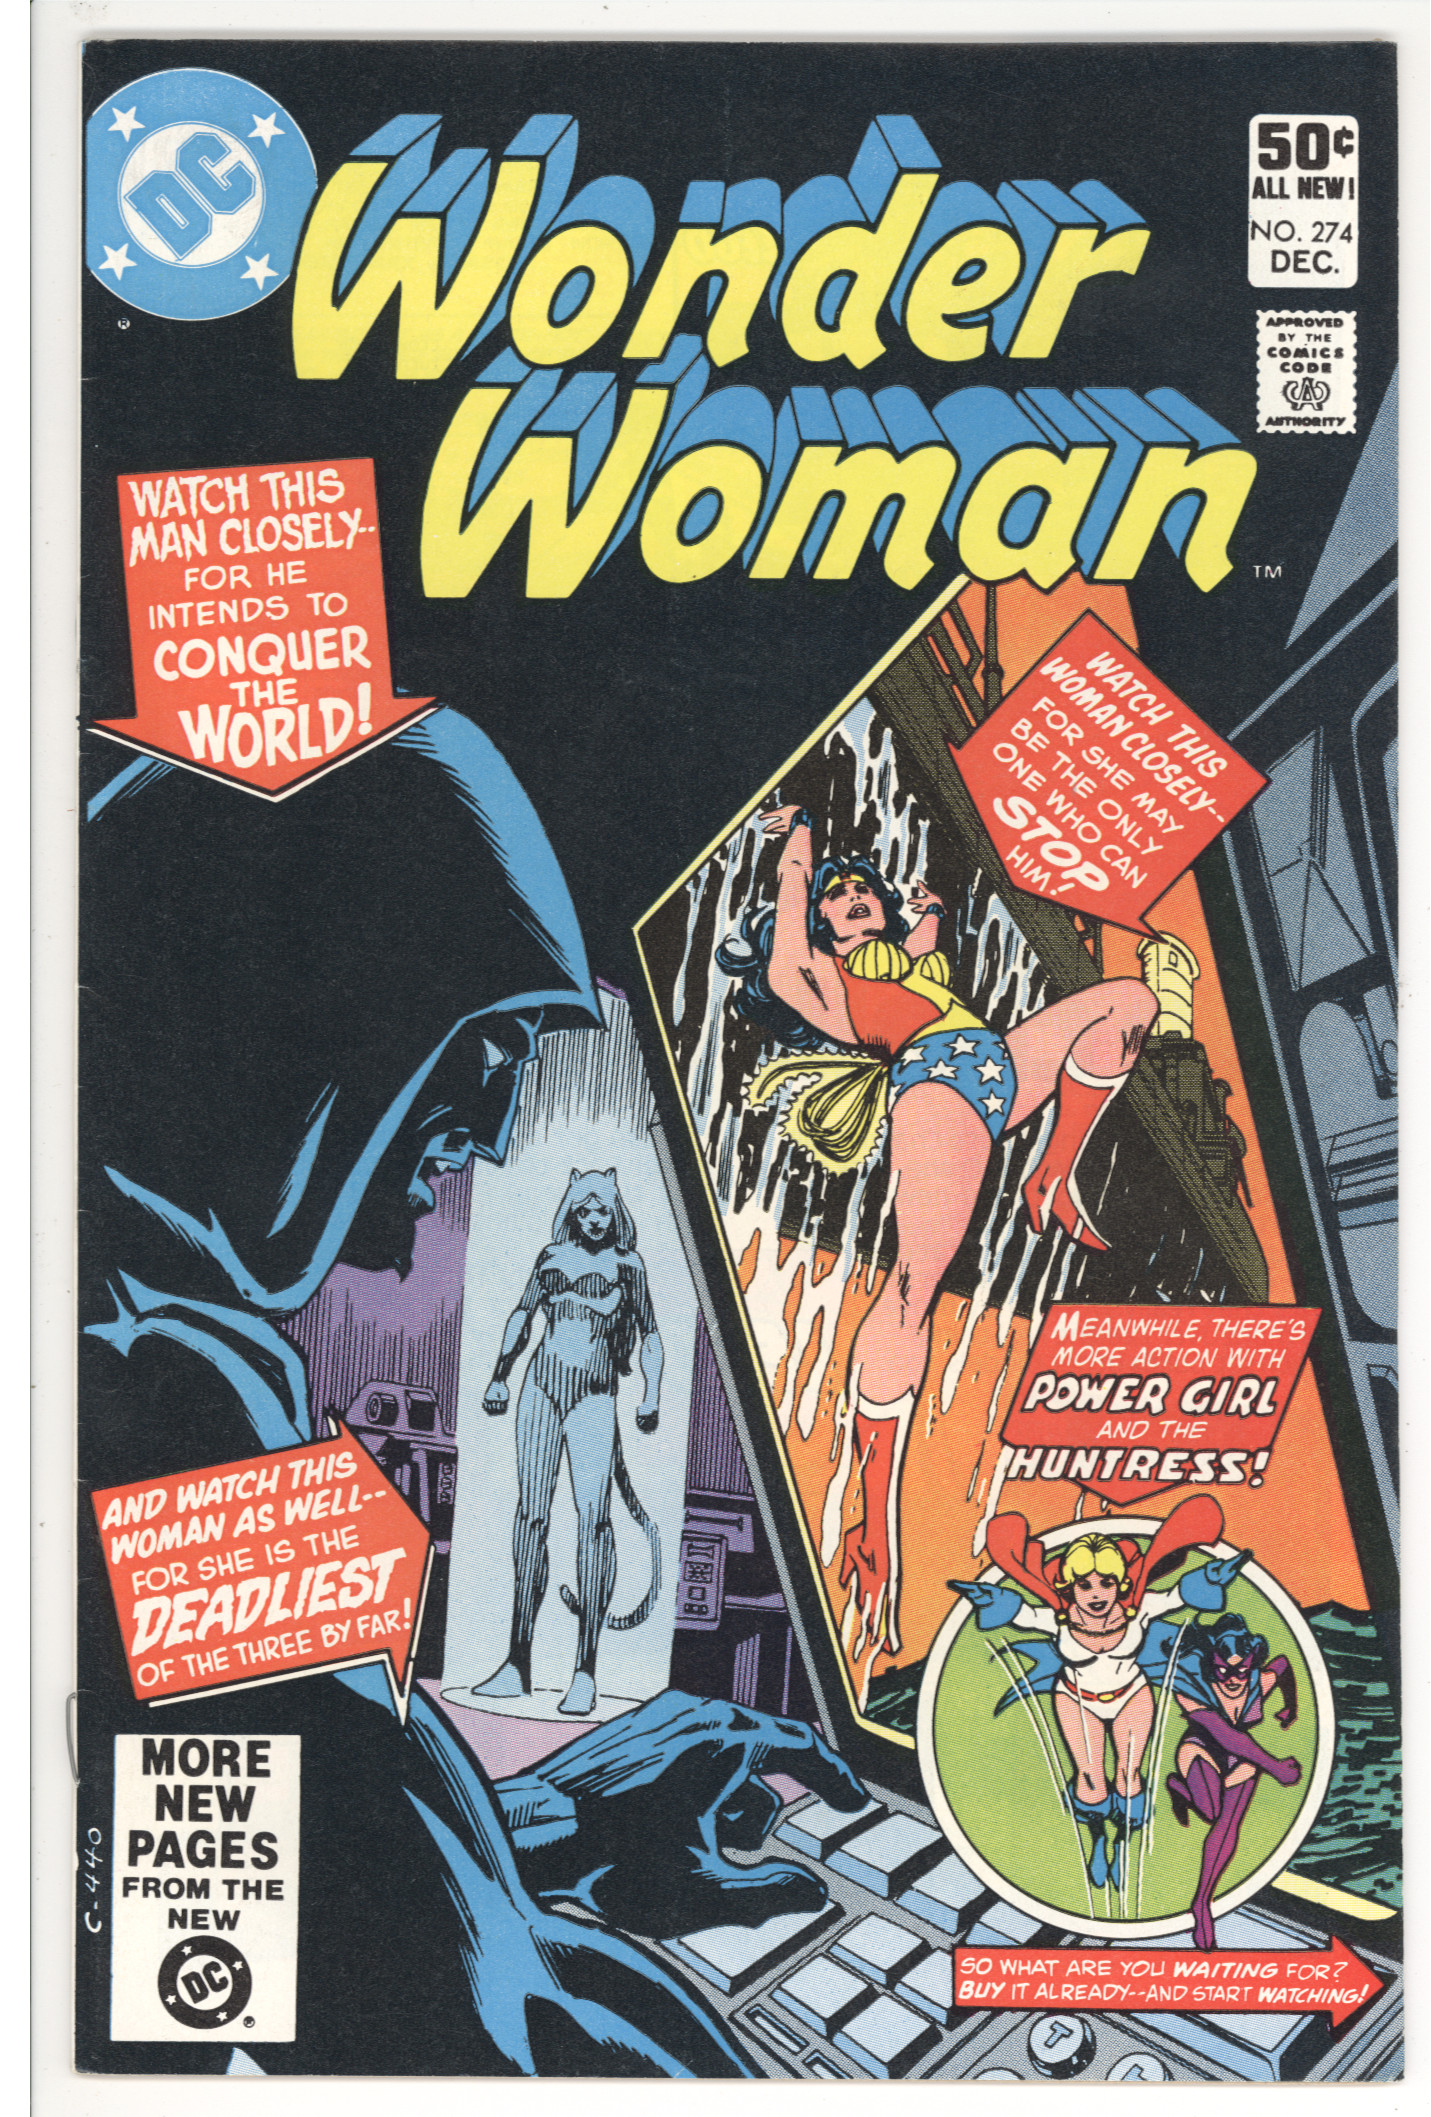 Wonder Woman #274 front